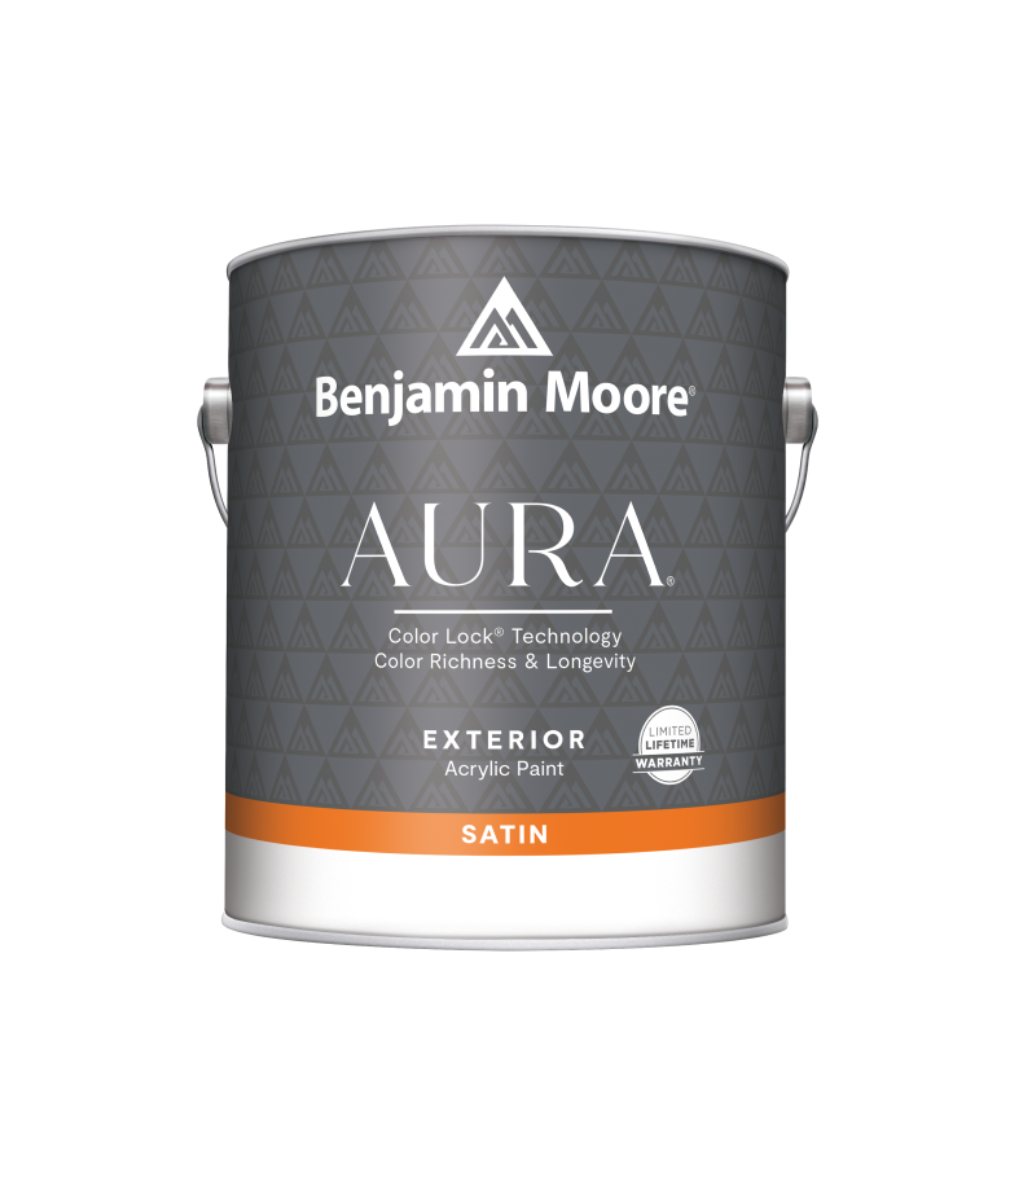 Benjamin Moore Aura Exterior Satin Paint available at JC Licht.